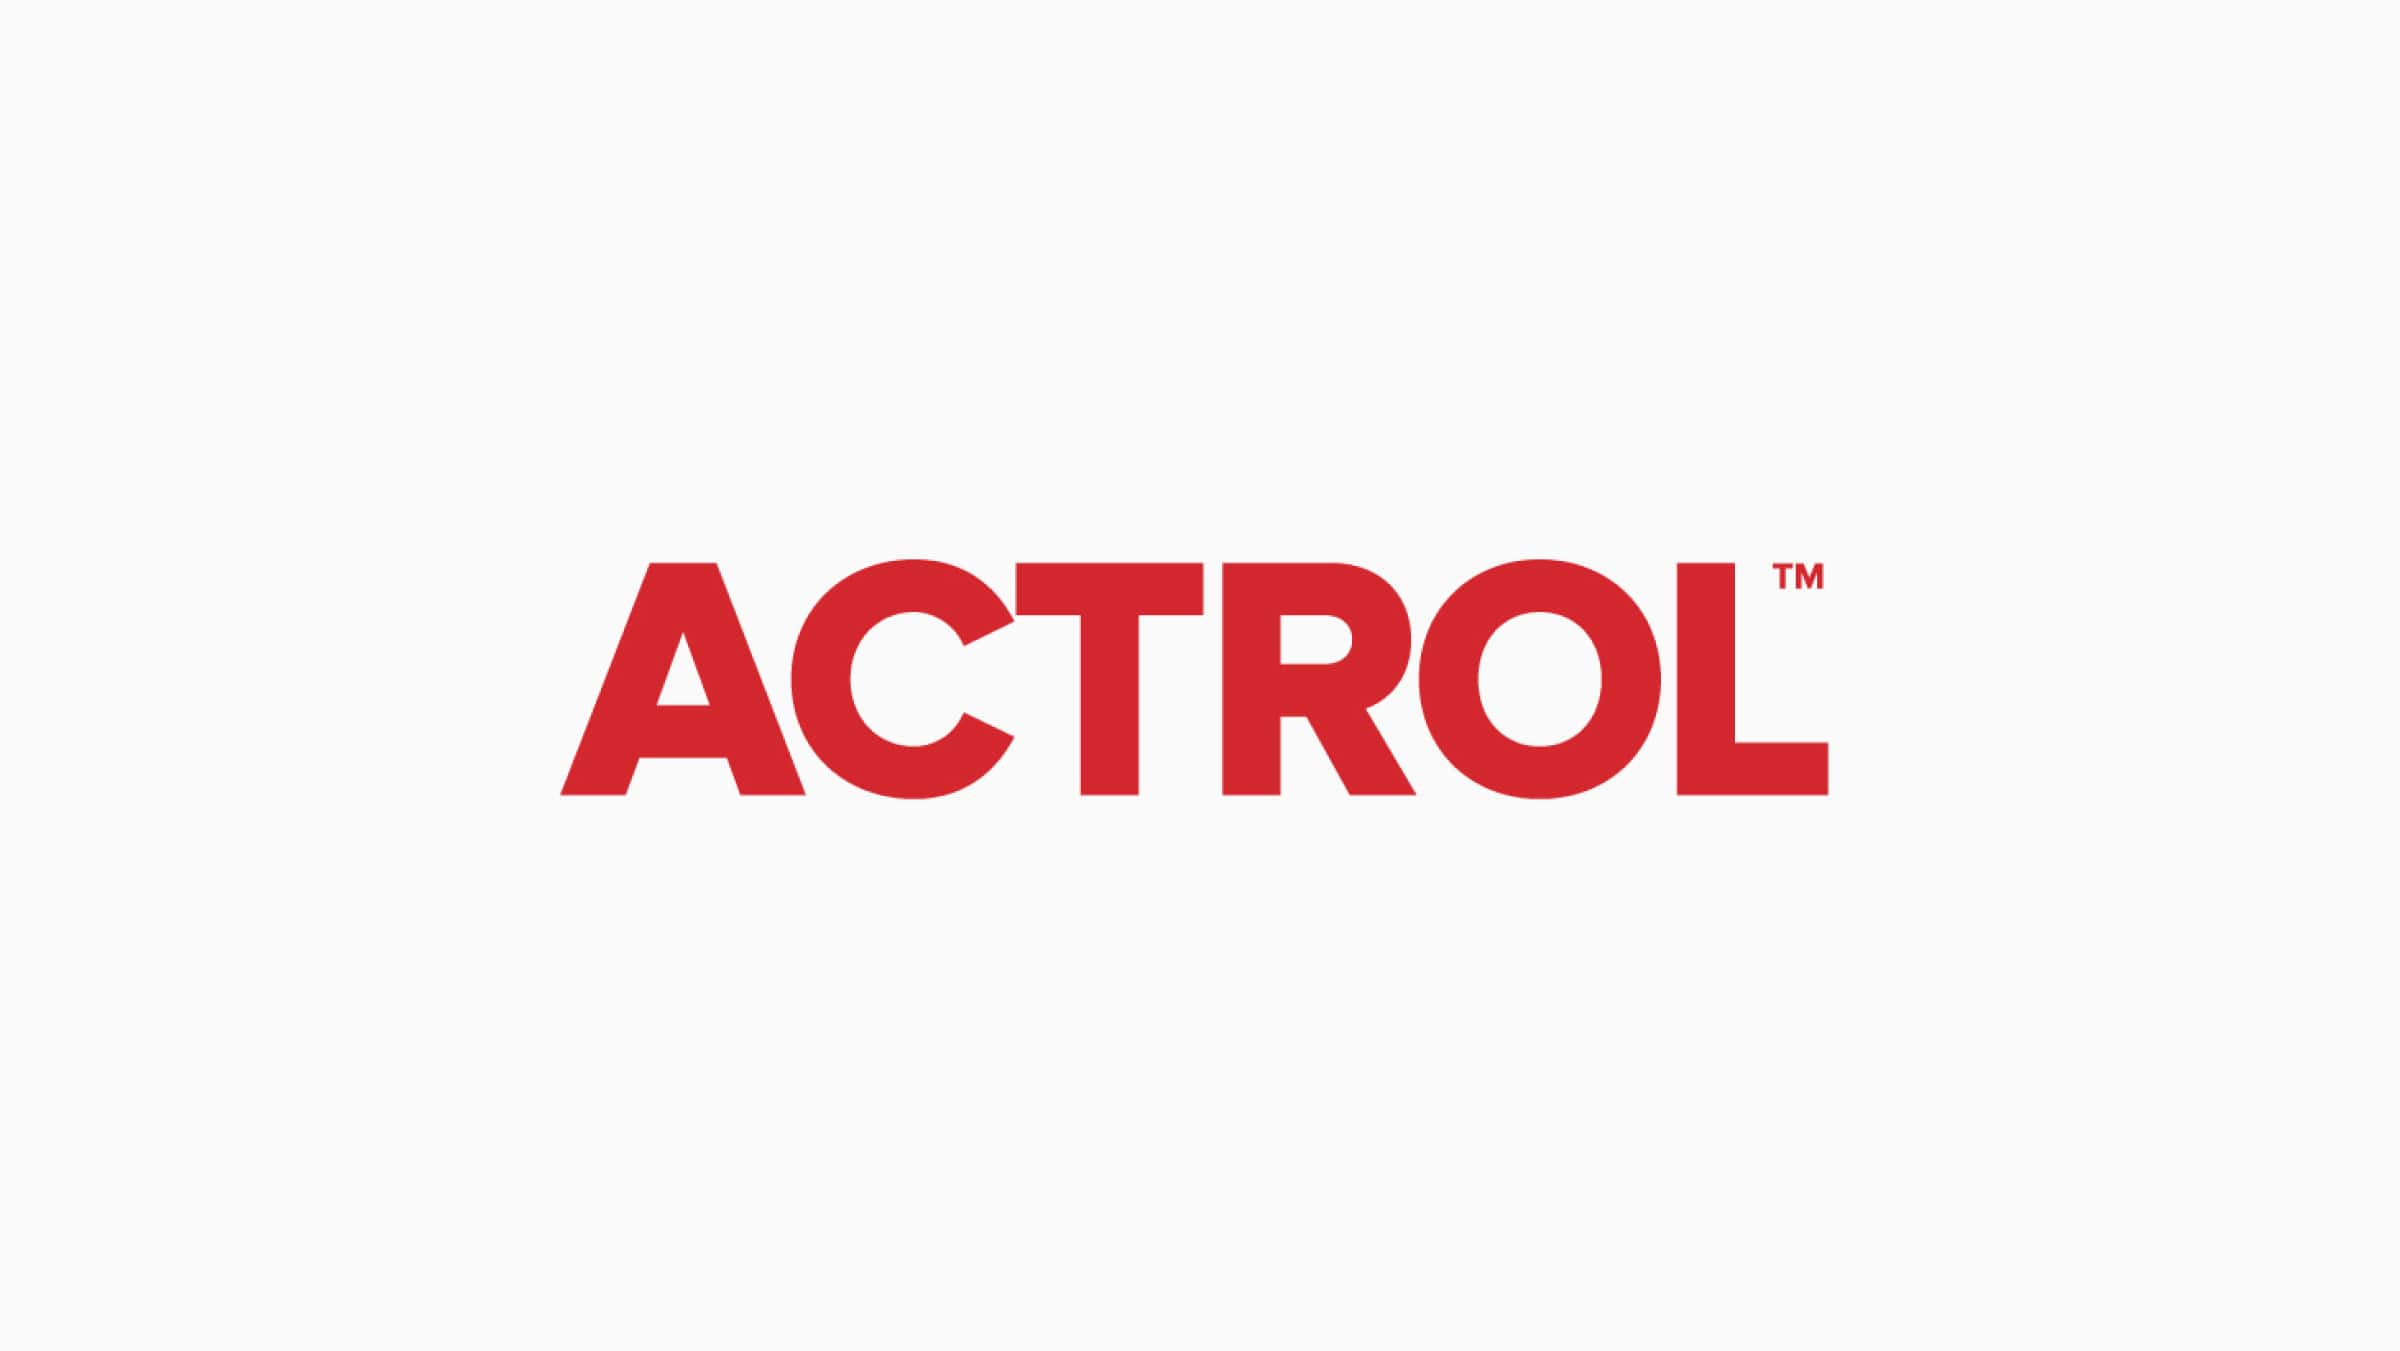 The Actrol logo